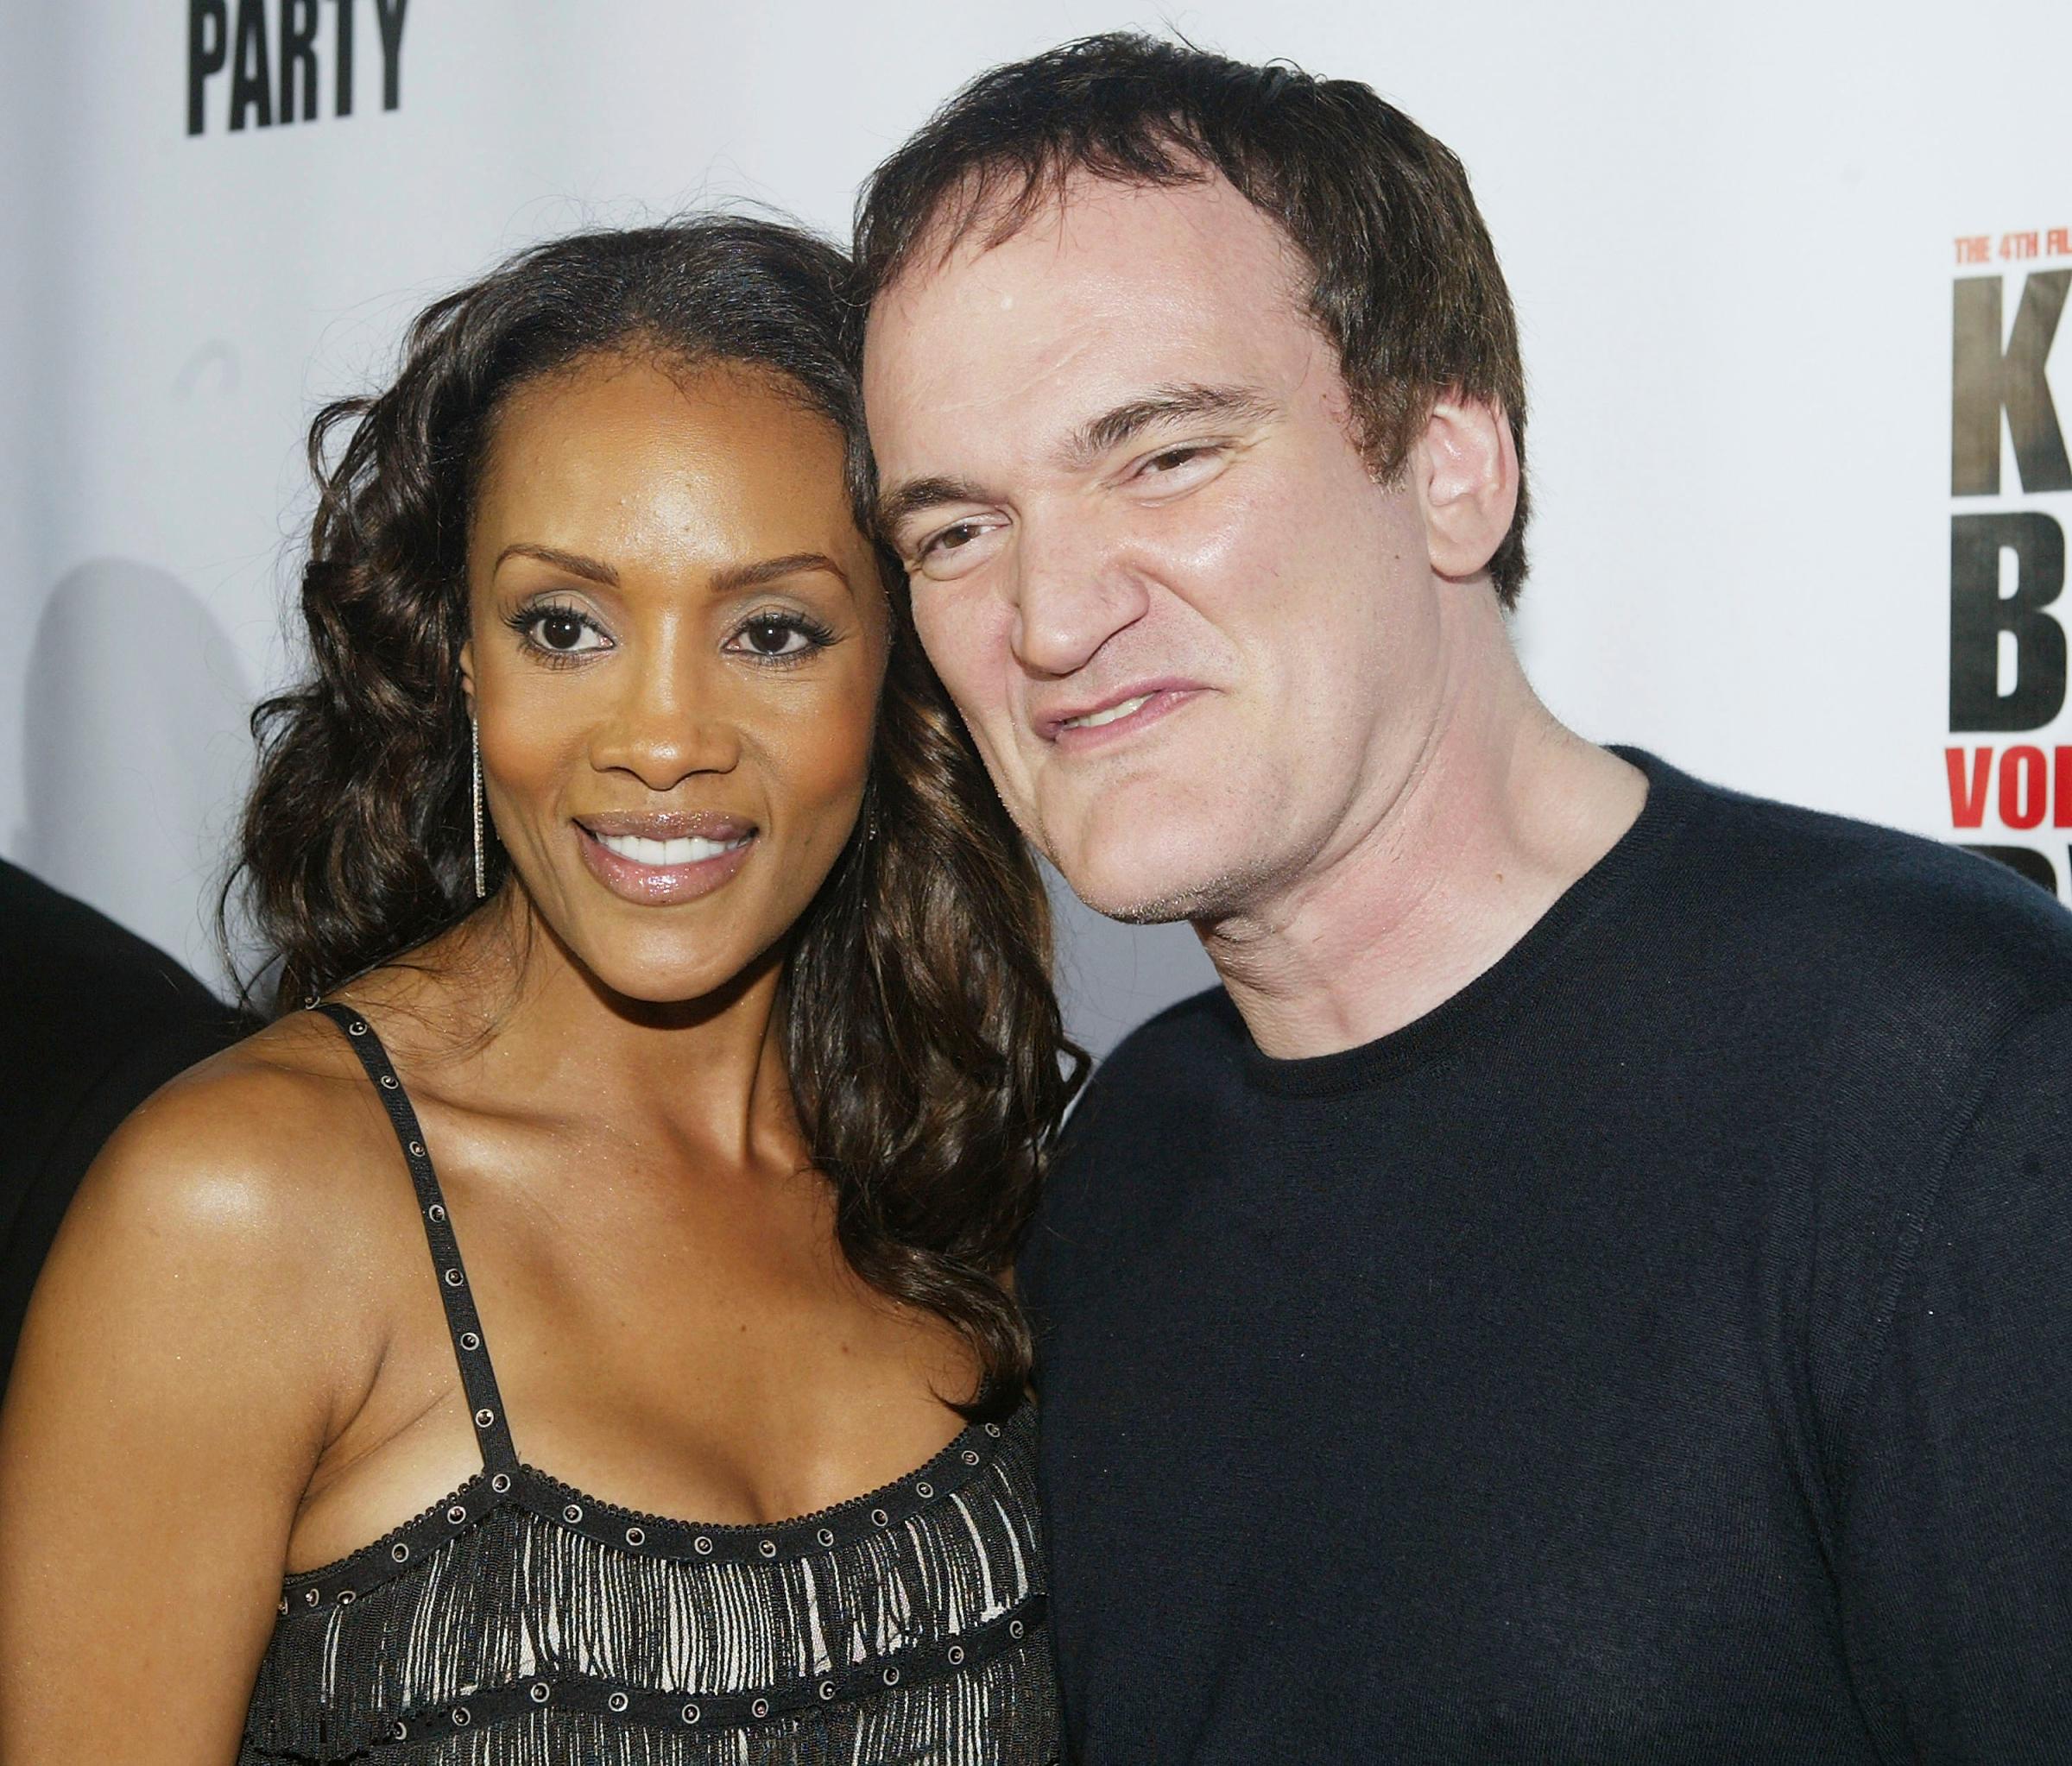 Vivica A. Fox and Quentin Tarantino at the 'Kill Bill' release party.